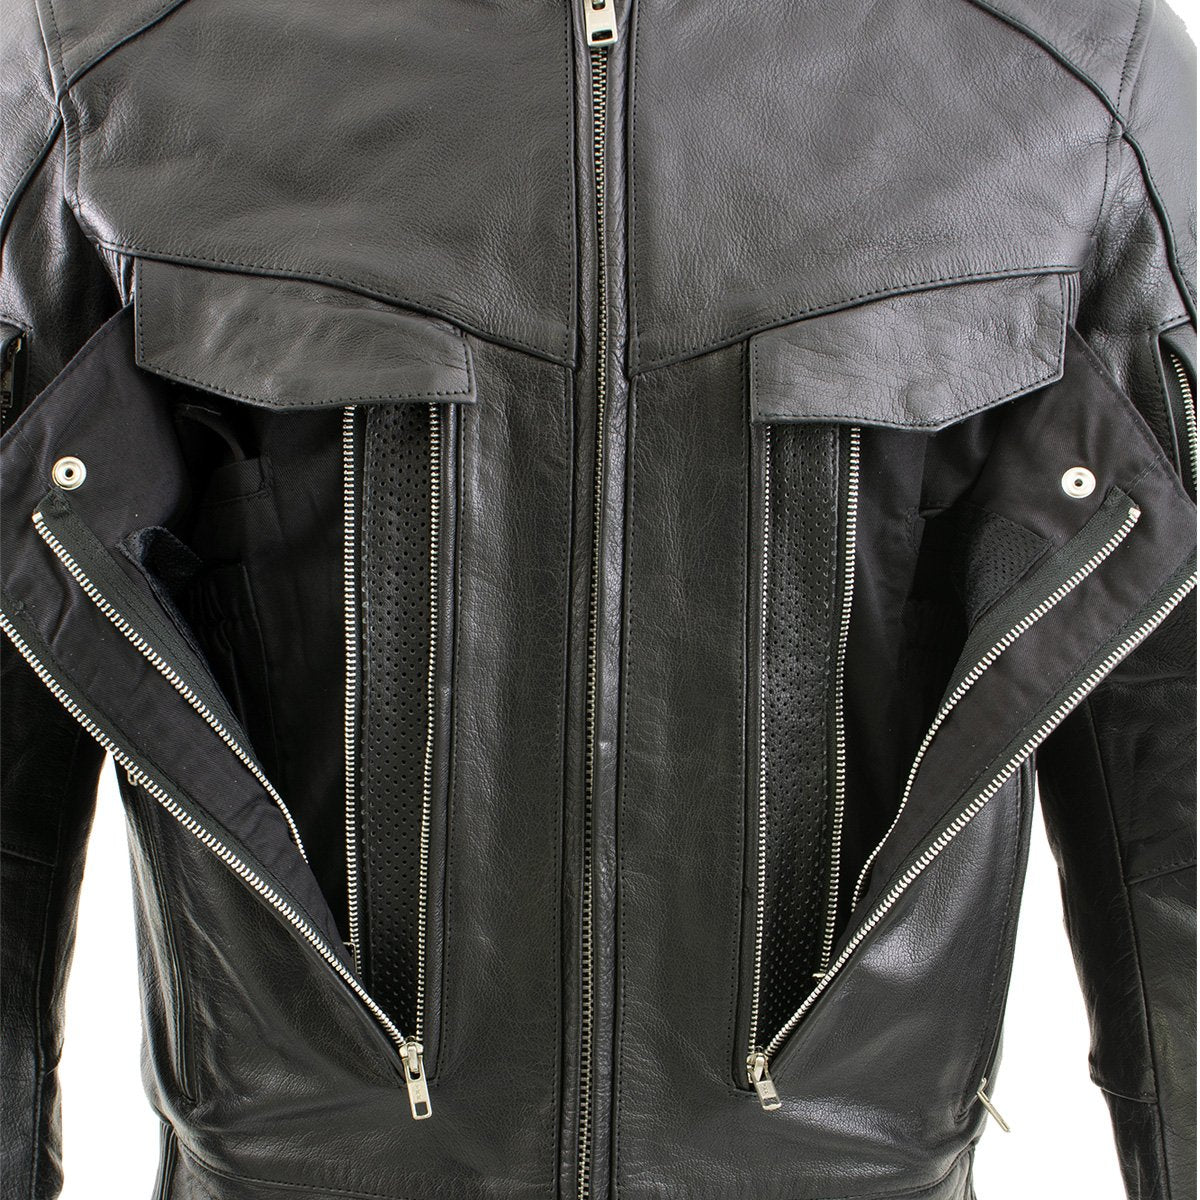 Xelement B4495 'Bandit' Men's Black Buffalo Leather Cruiser Motorcycle Jacket with X-Armor Protection